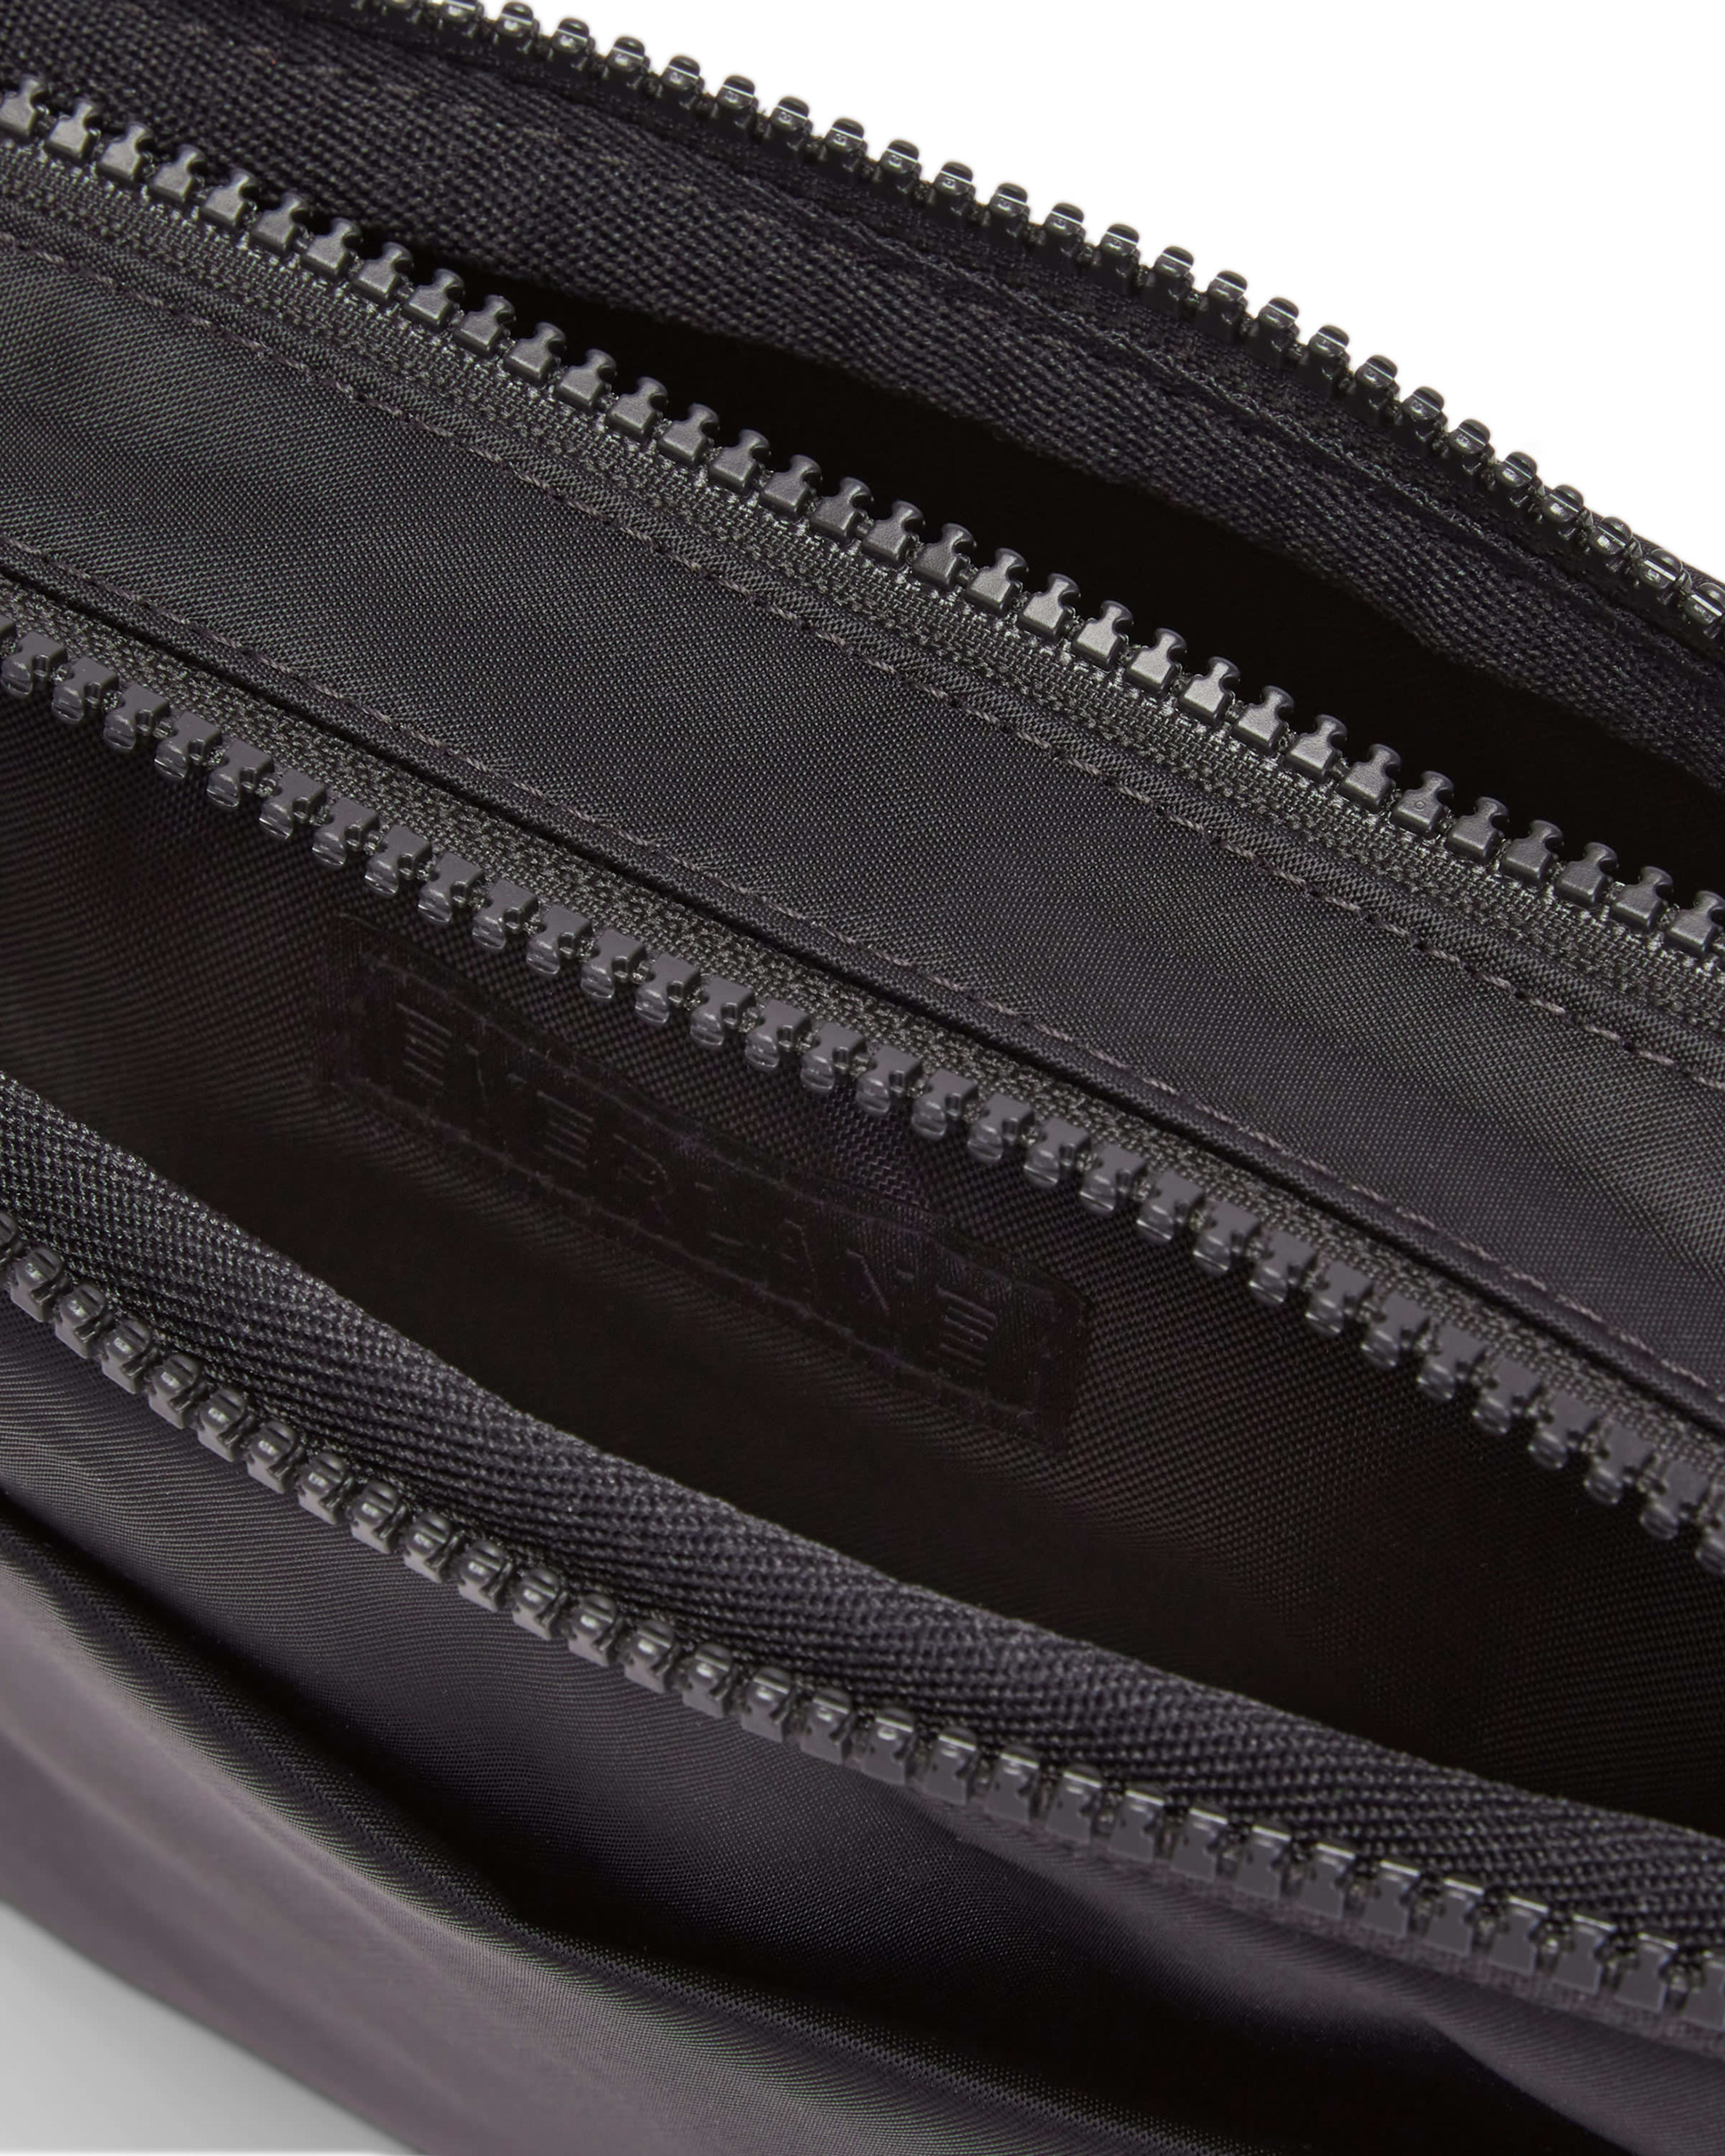 The Recycled Nylon Camera Bag Black – Everlane